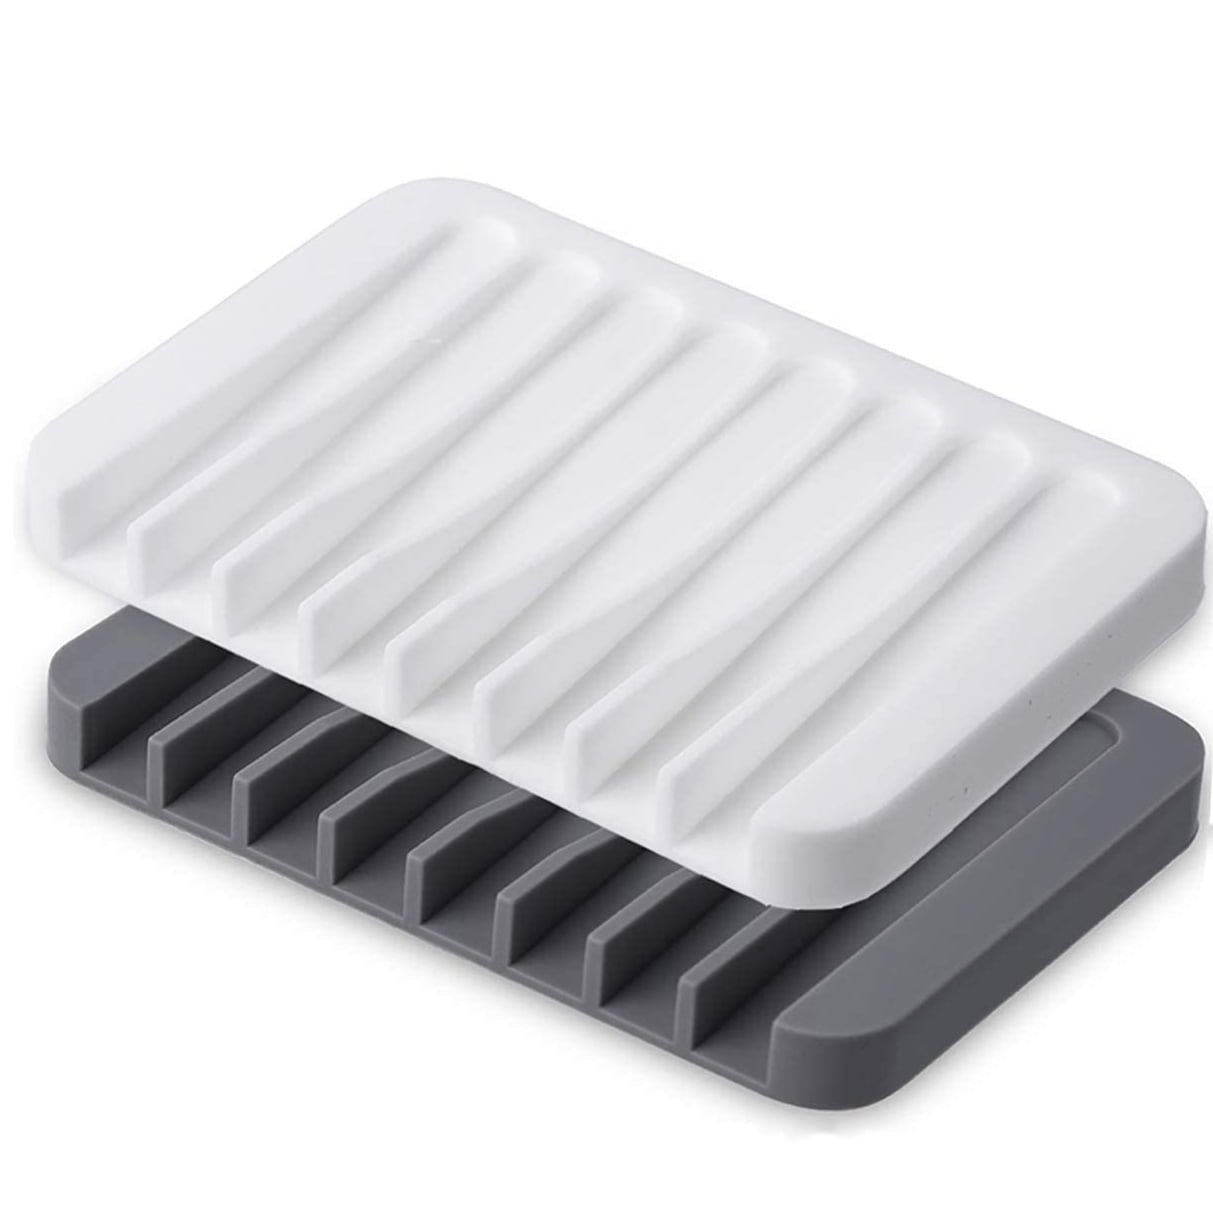 Bathroom Kitchen Silicone Soap Dish Holder Rack Tray Plate Saver Cxz Plsei 